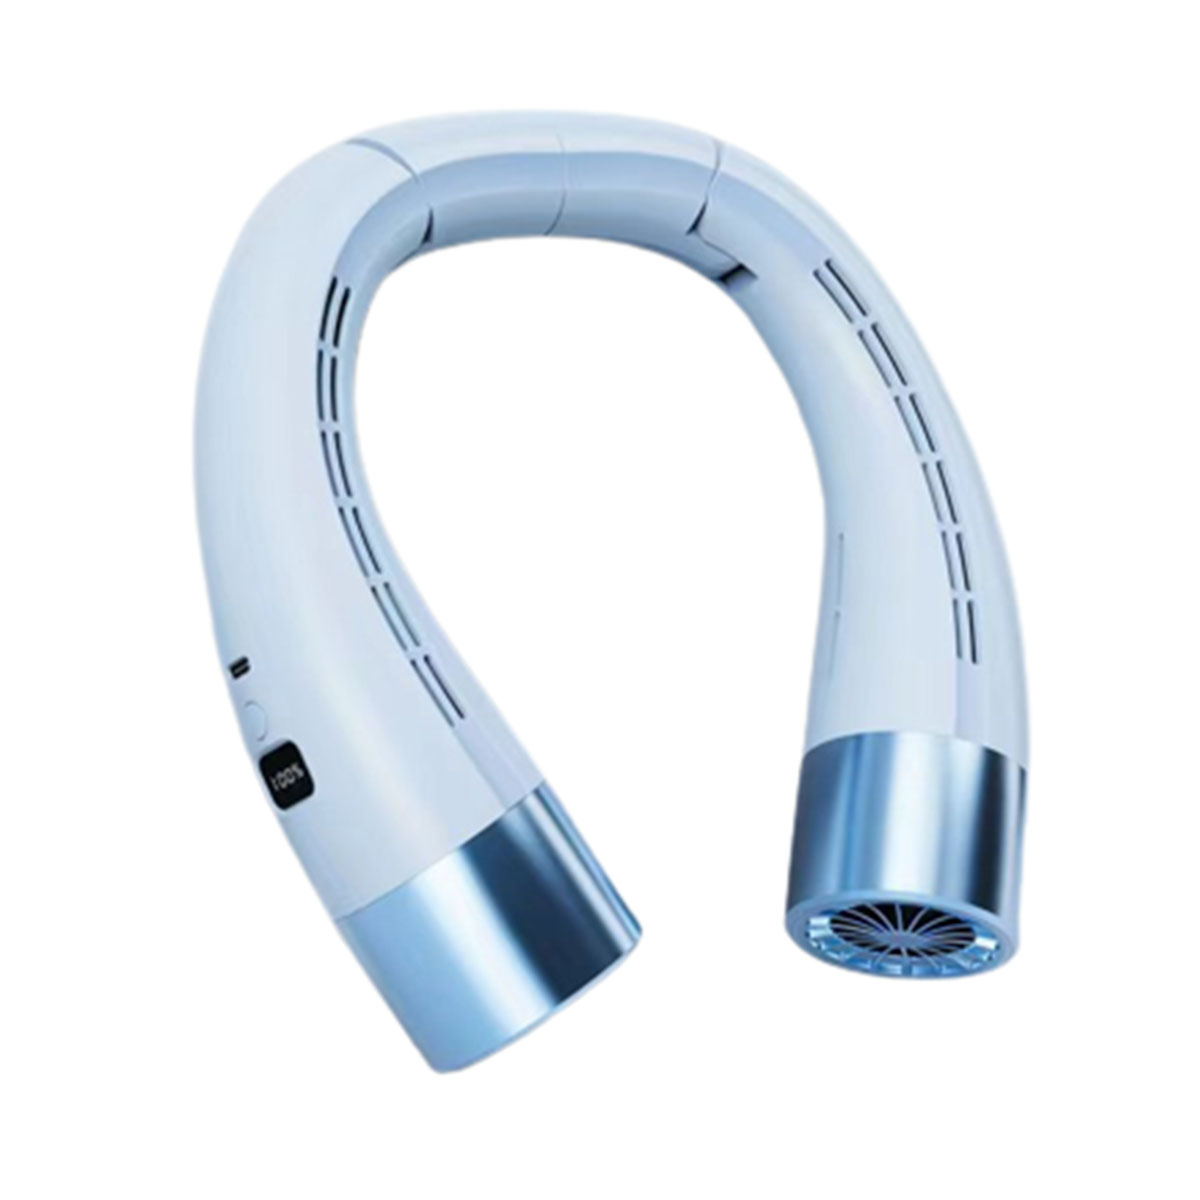 Blatt SYNTEK Ventilator Weiß tragbare weiß USB Fan Fan Nacken Hals faltbare hängende stille